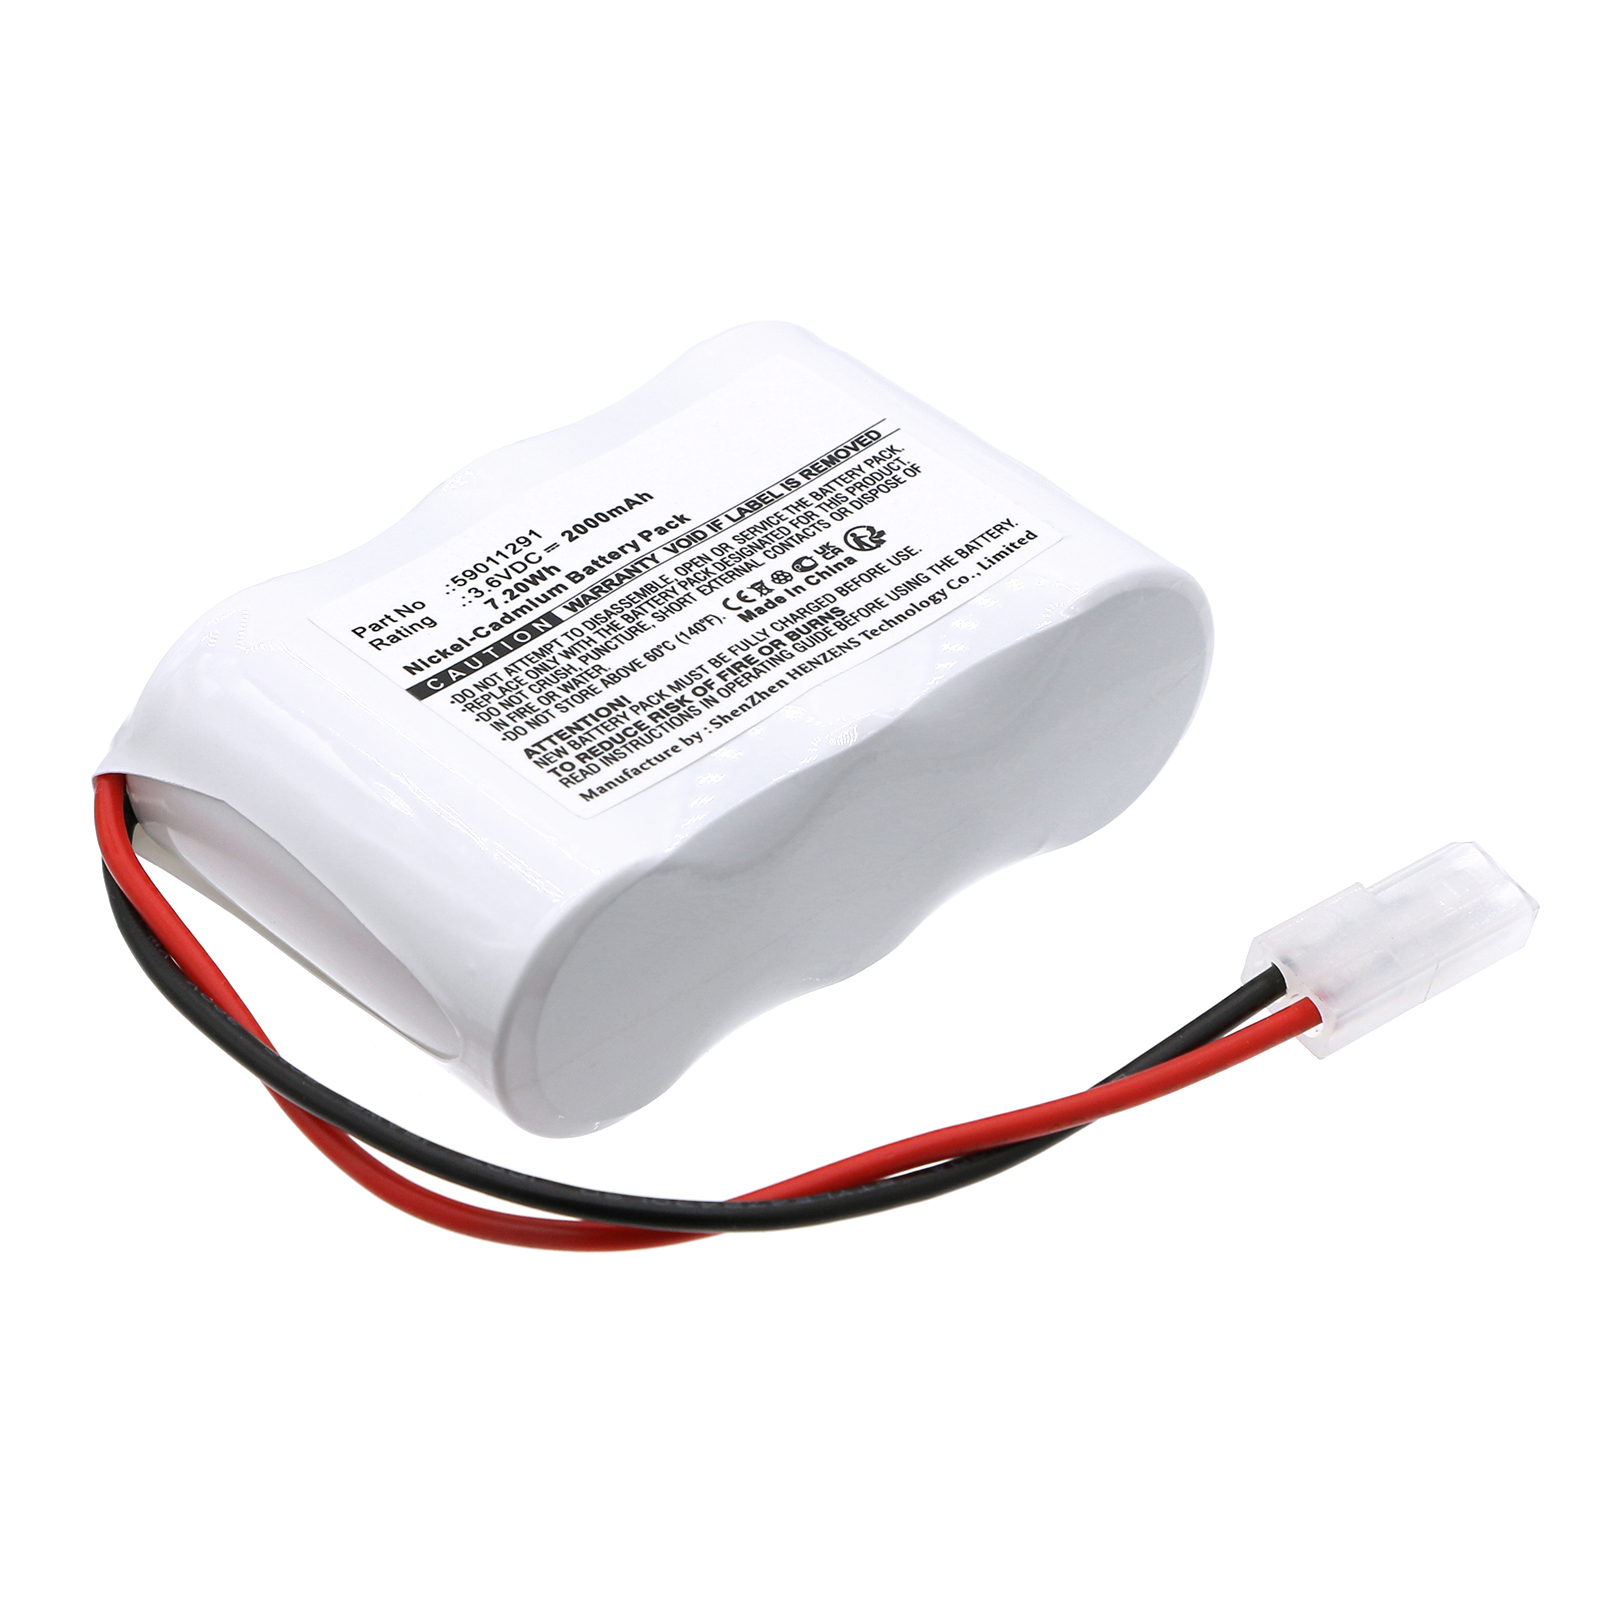 Synergy Digital Emergency Lighting Battery, Compatible with Thorn Voyager 59011291 Emergency Lighting Battery (Ni-CD, 3.6V, 2000mAh)